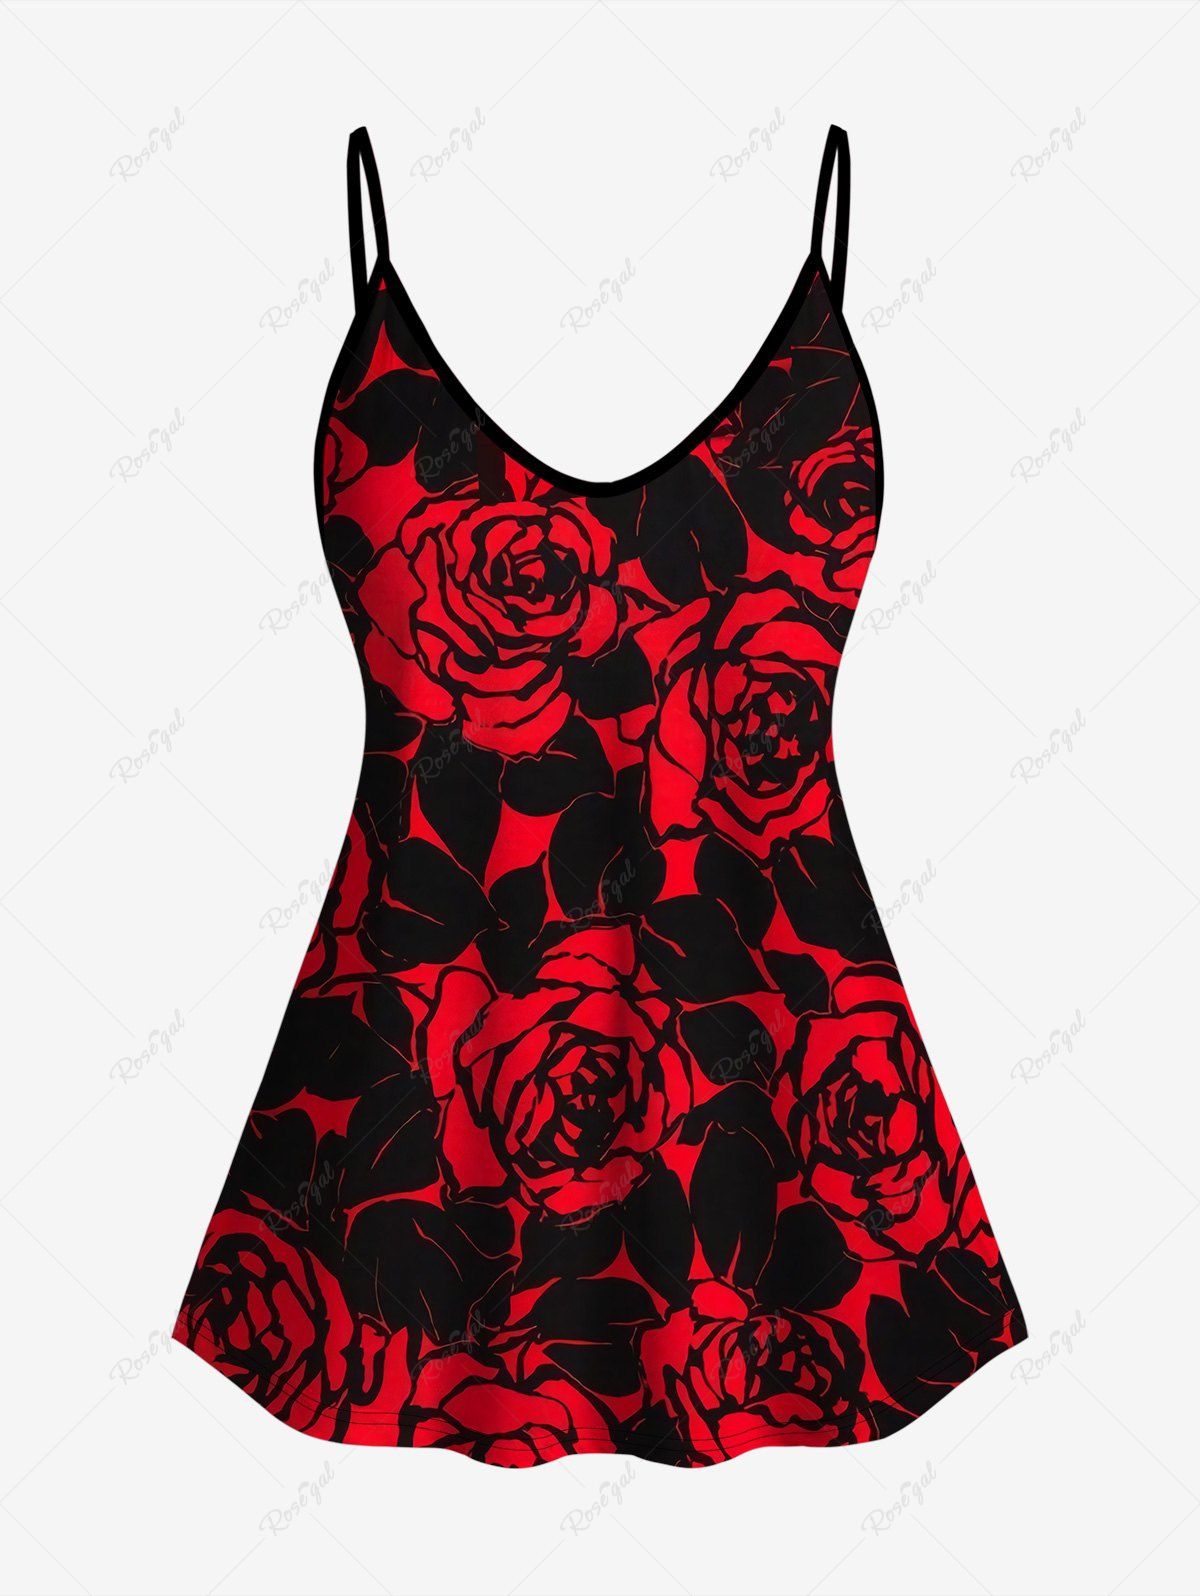 Cheap Plus Size Rose Print Cami Top (Adjustable Shoulder Strap)  